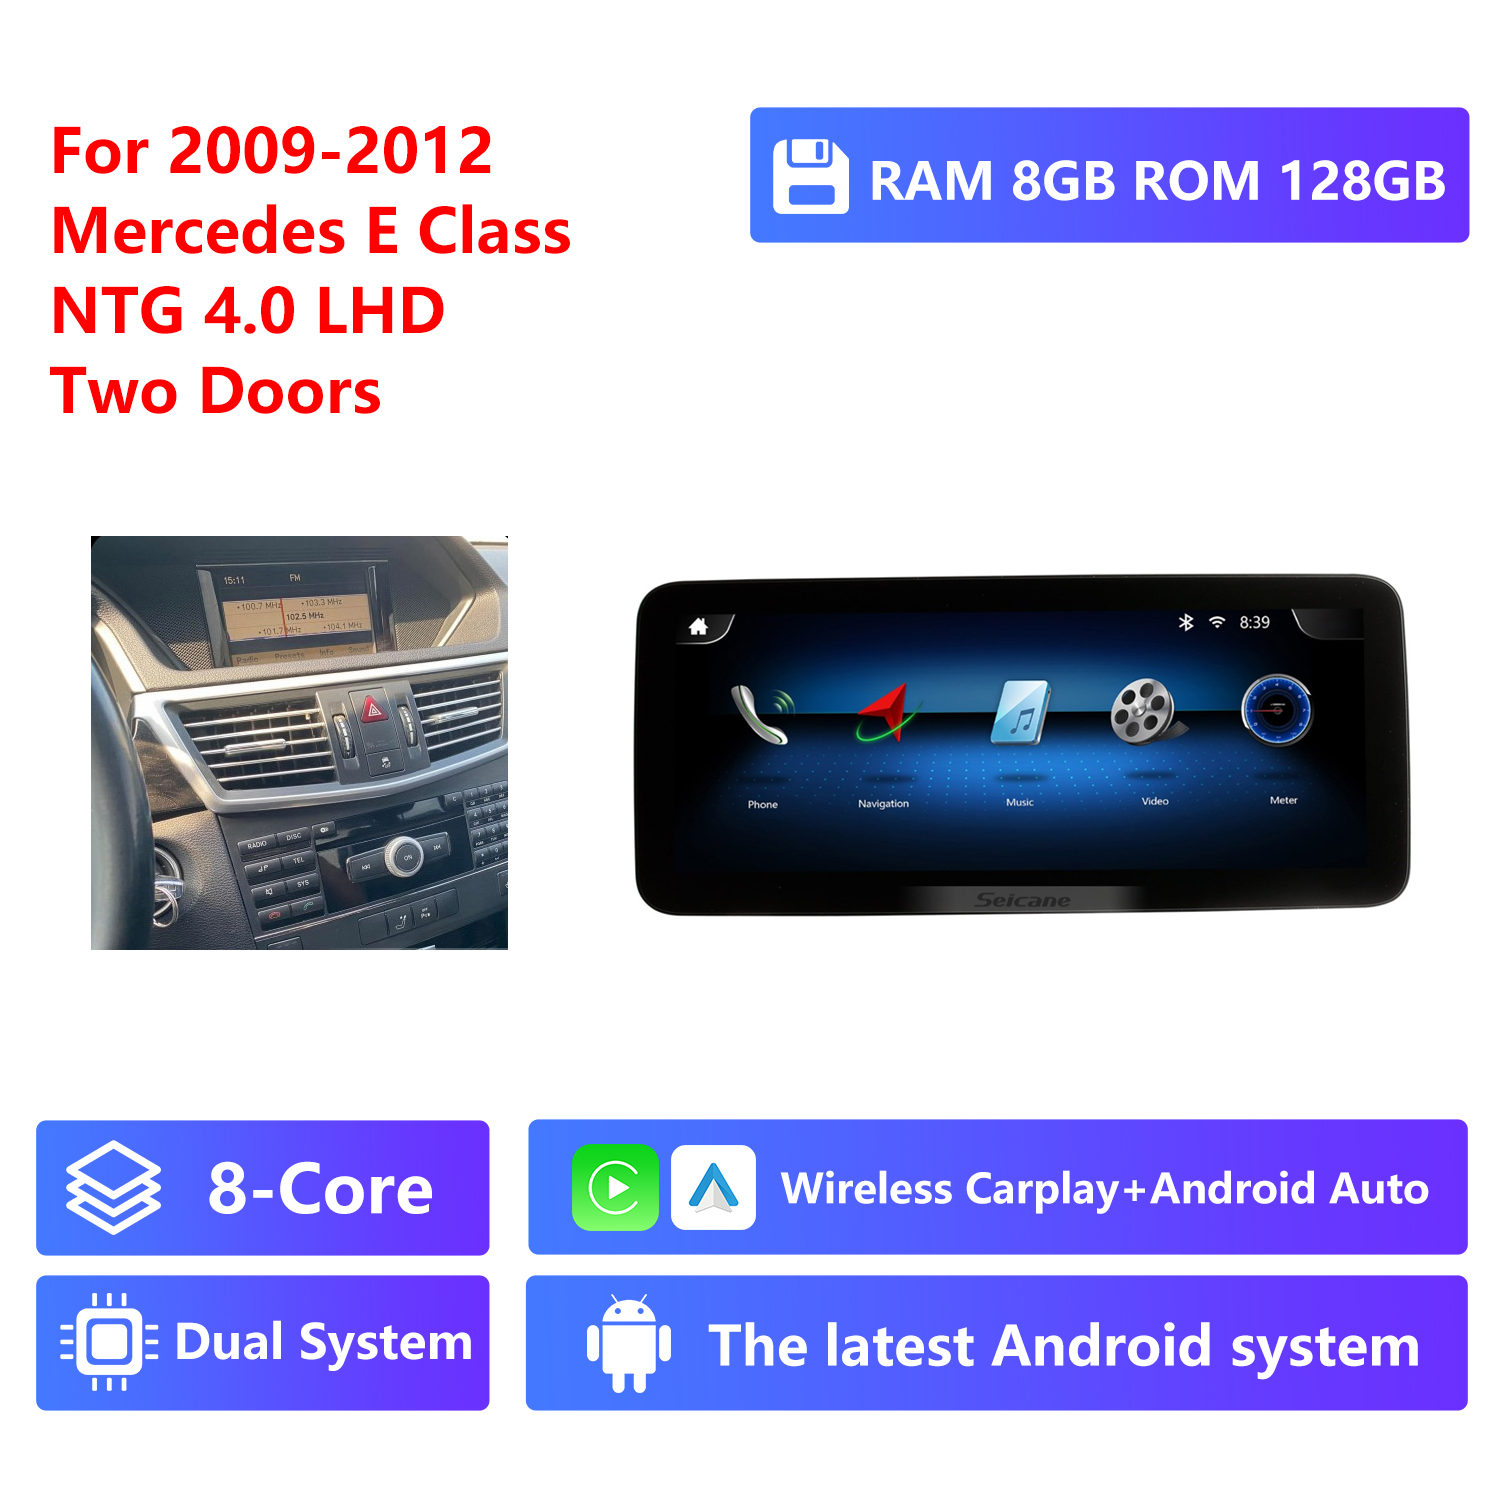 8-Core RAM 8G ROM 128G,LHD,NTG4.0,two doors